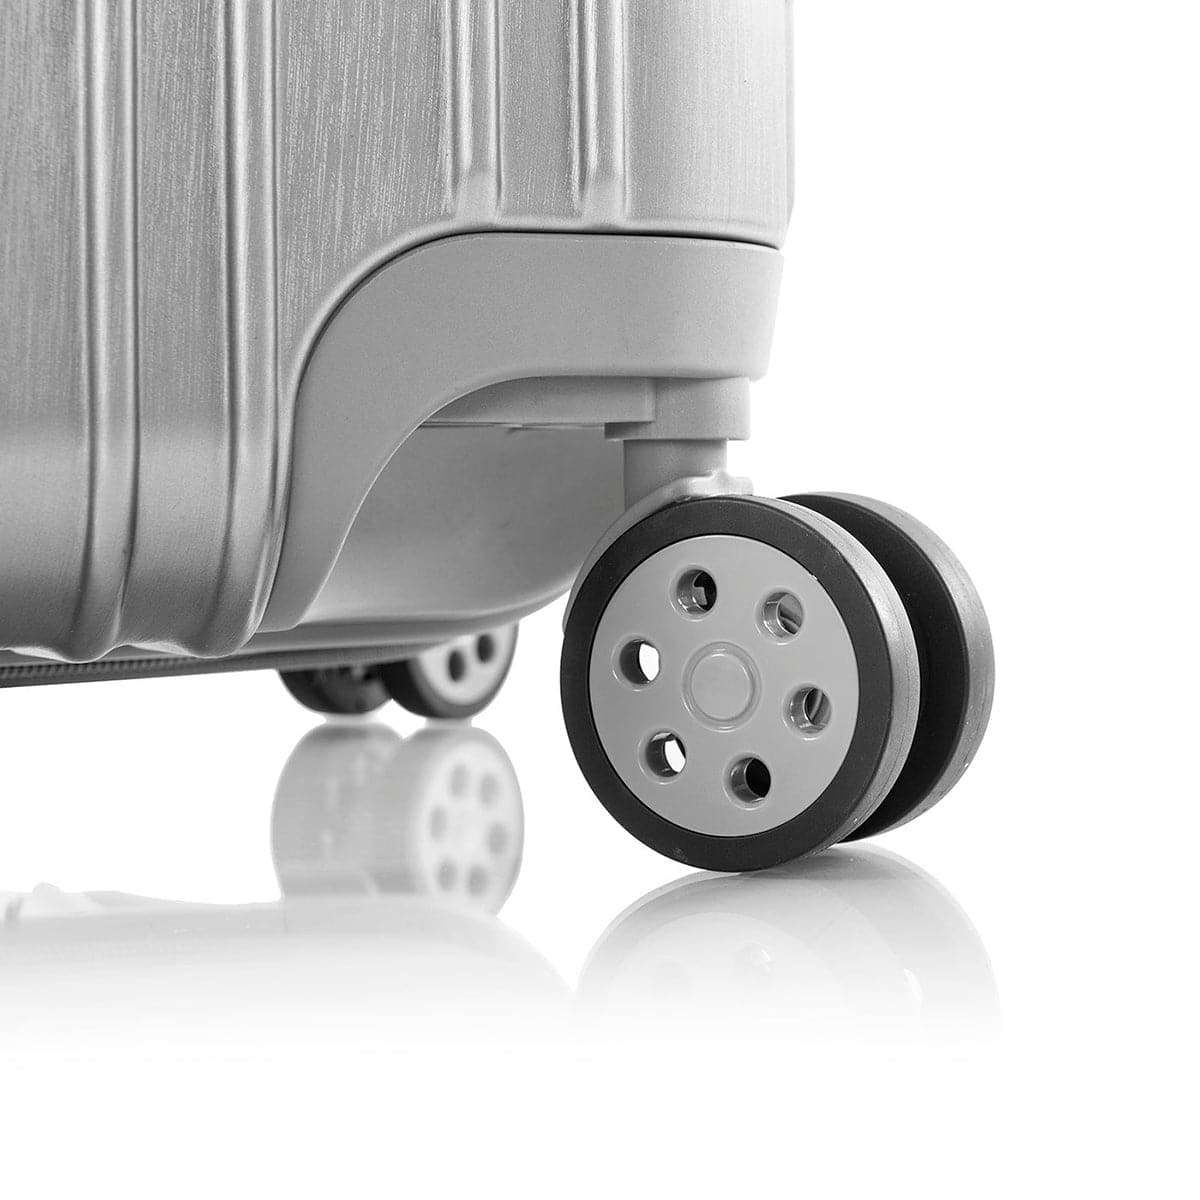 Heys Xtrak 21" Carry-On Spinner Luggage